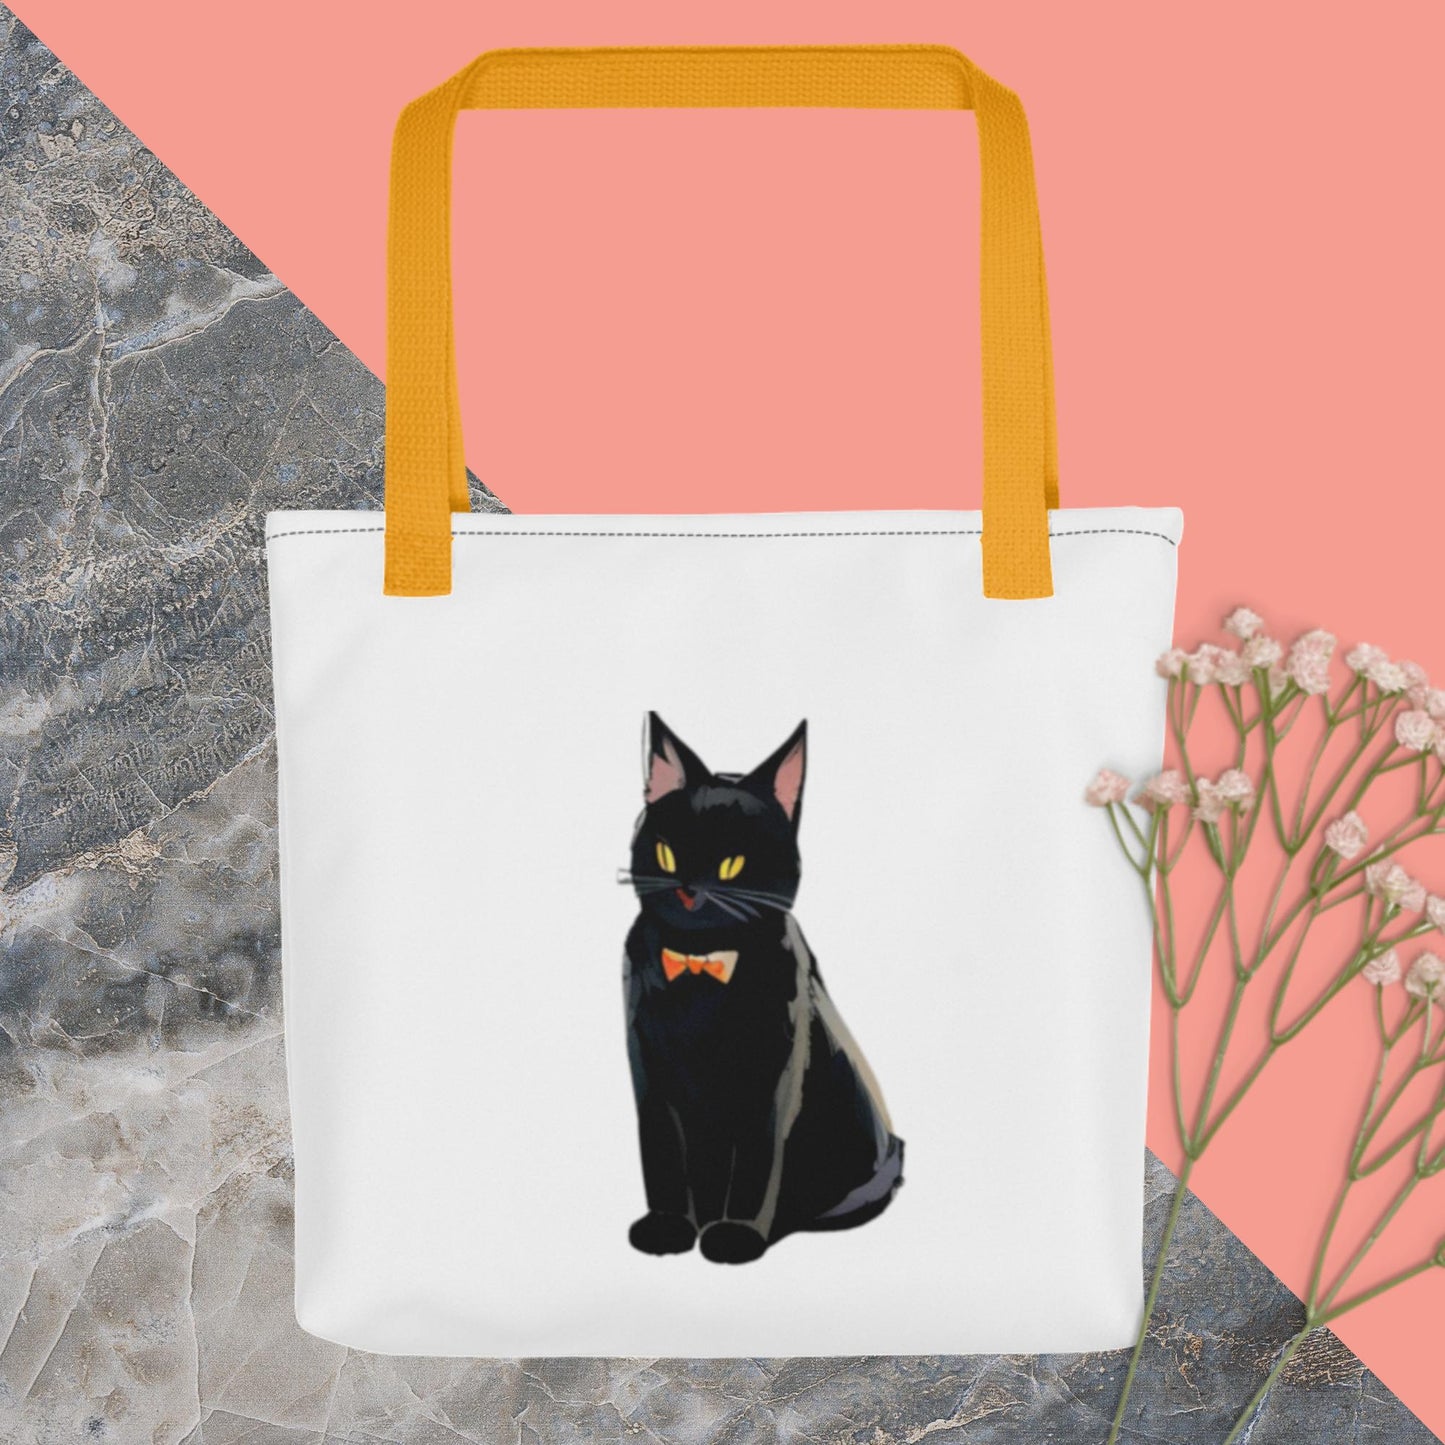 Tote bag black cat with orange bow tie